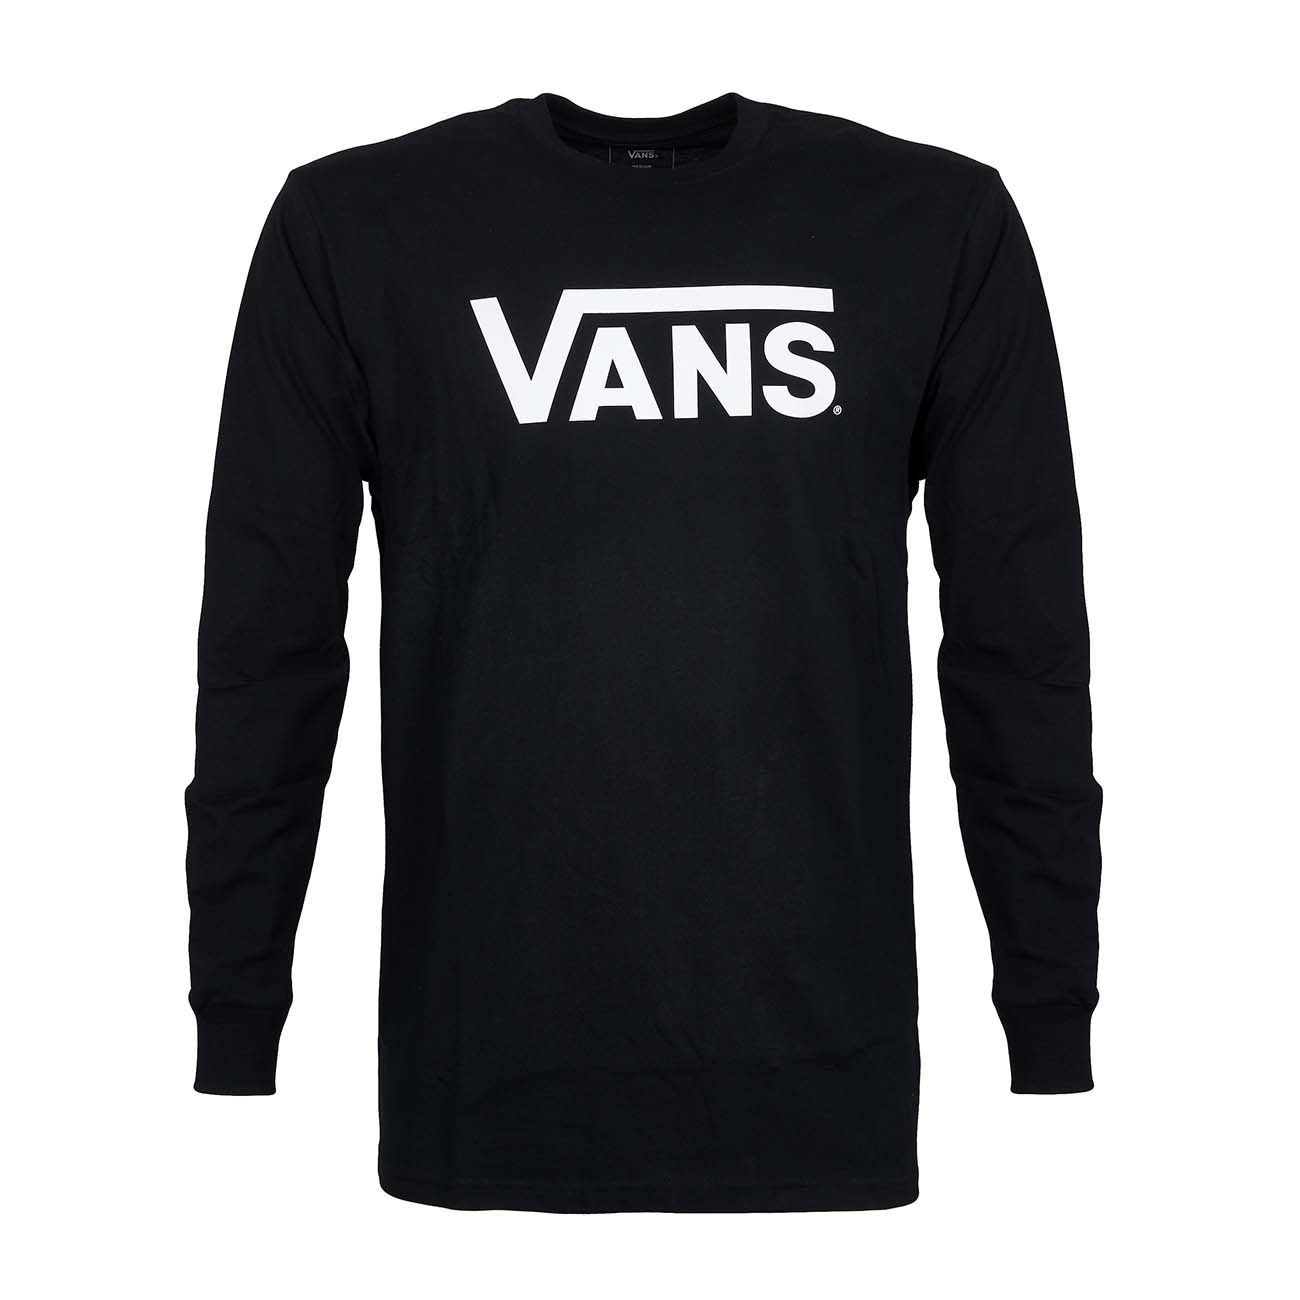 vans t shirt black and white